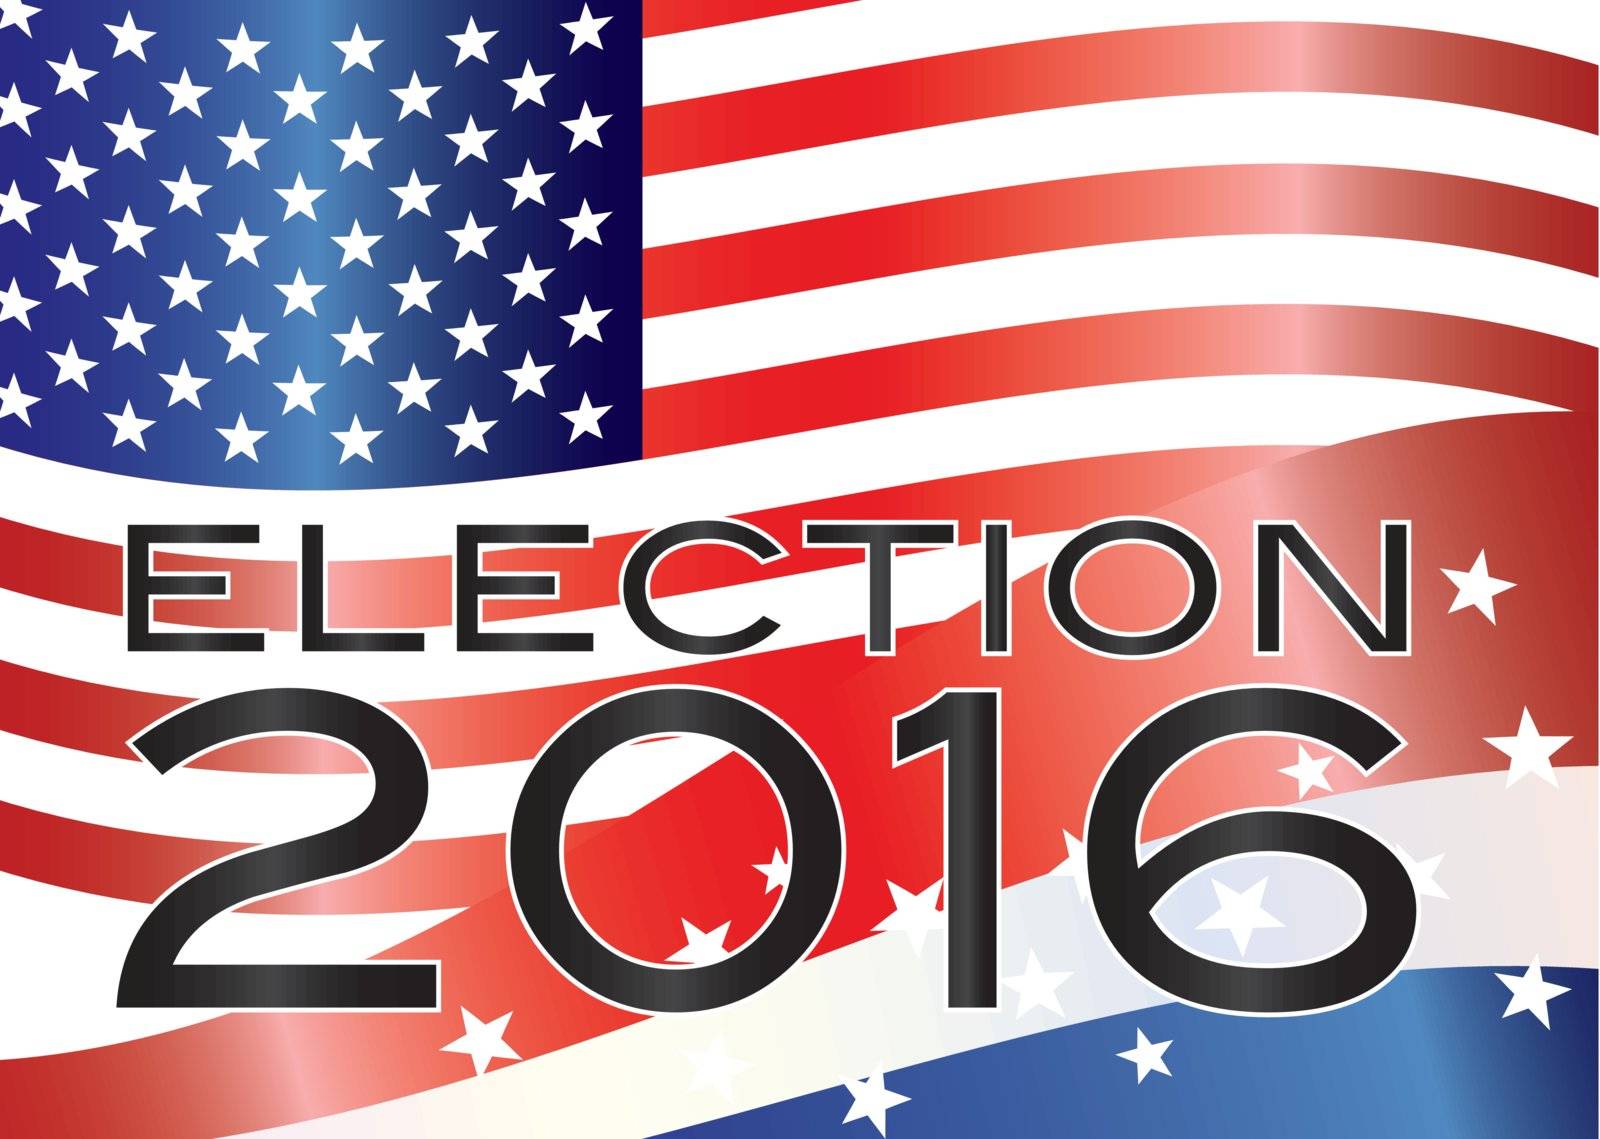 Election 2016 Illustration by jpldesigns